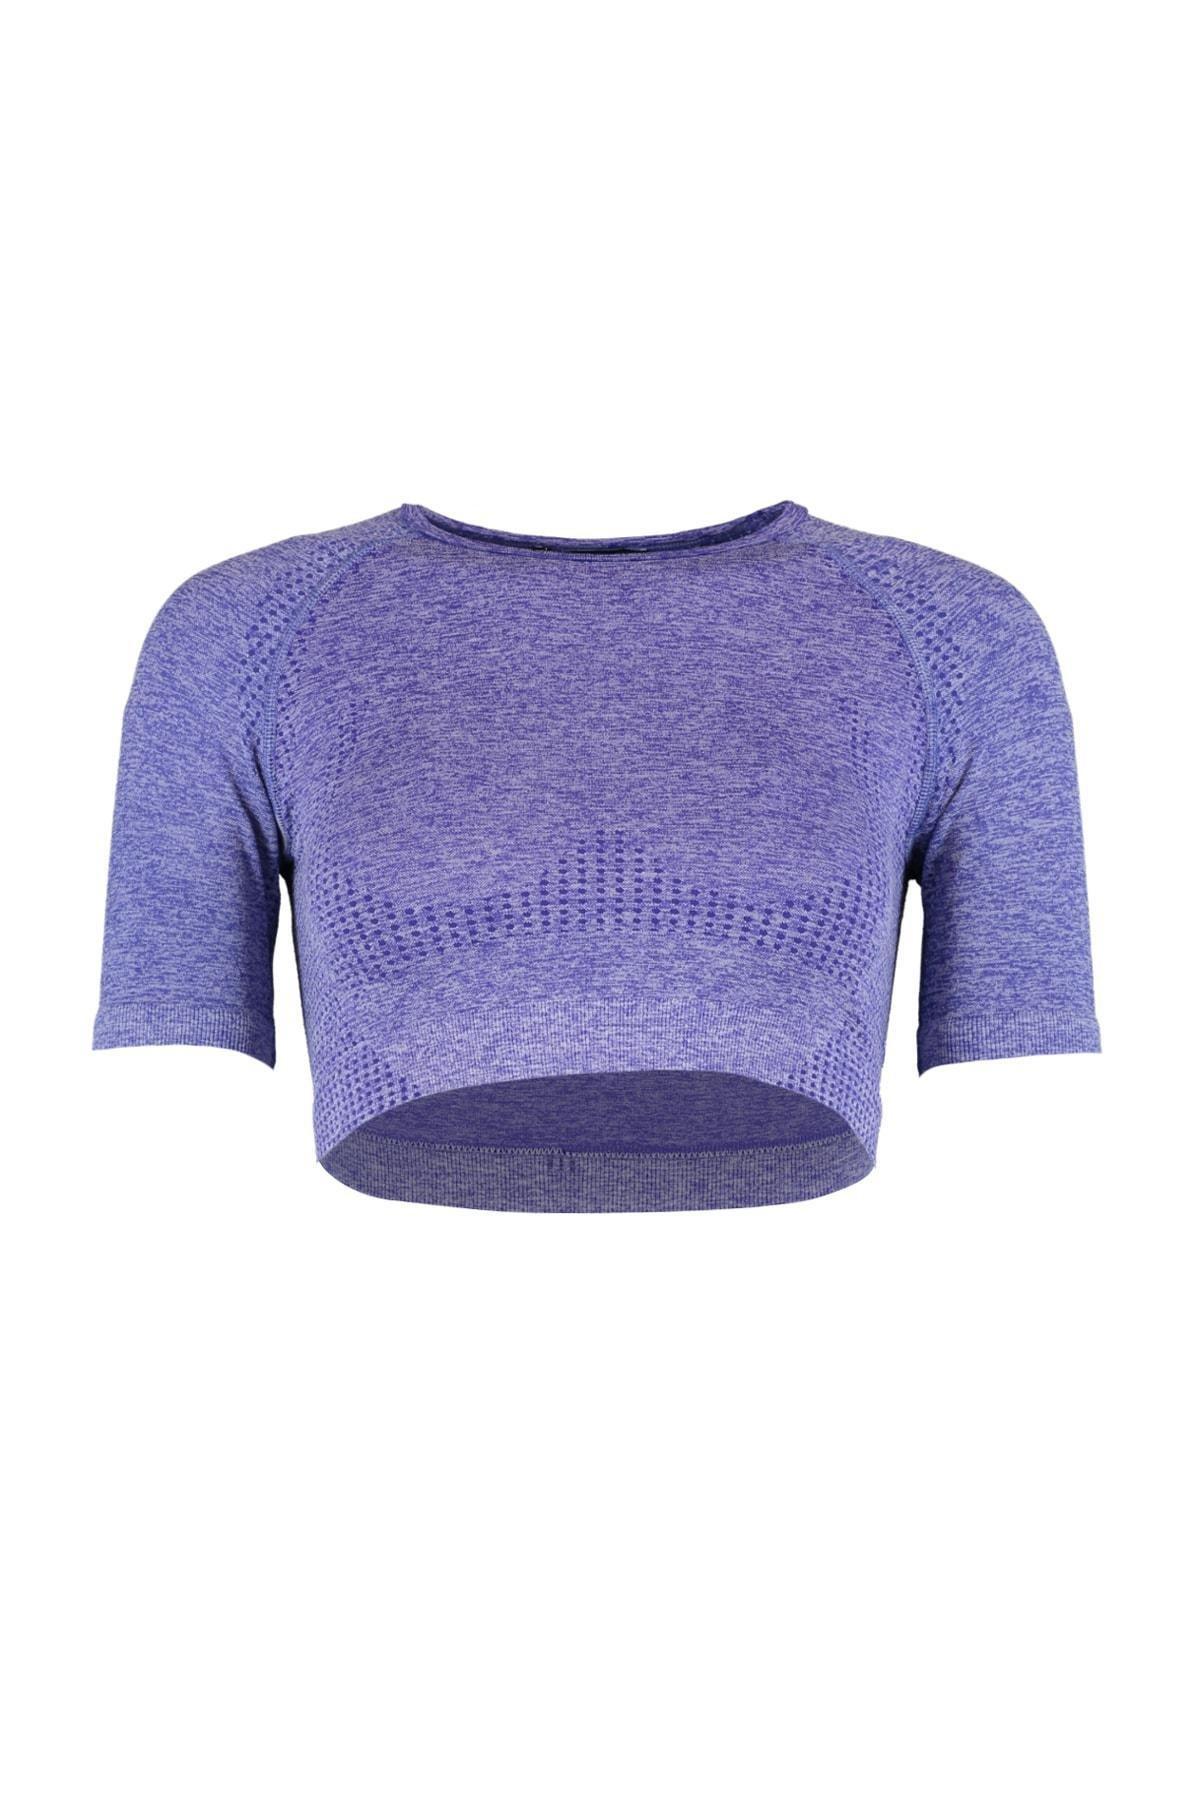 Trendyol - Lilac Crop Seamless/Seamless Crew Neck Knitted Sports Top/Blouse TWOSS21BZ1419, Einzeln